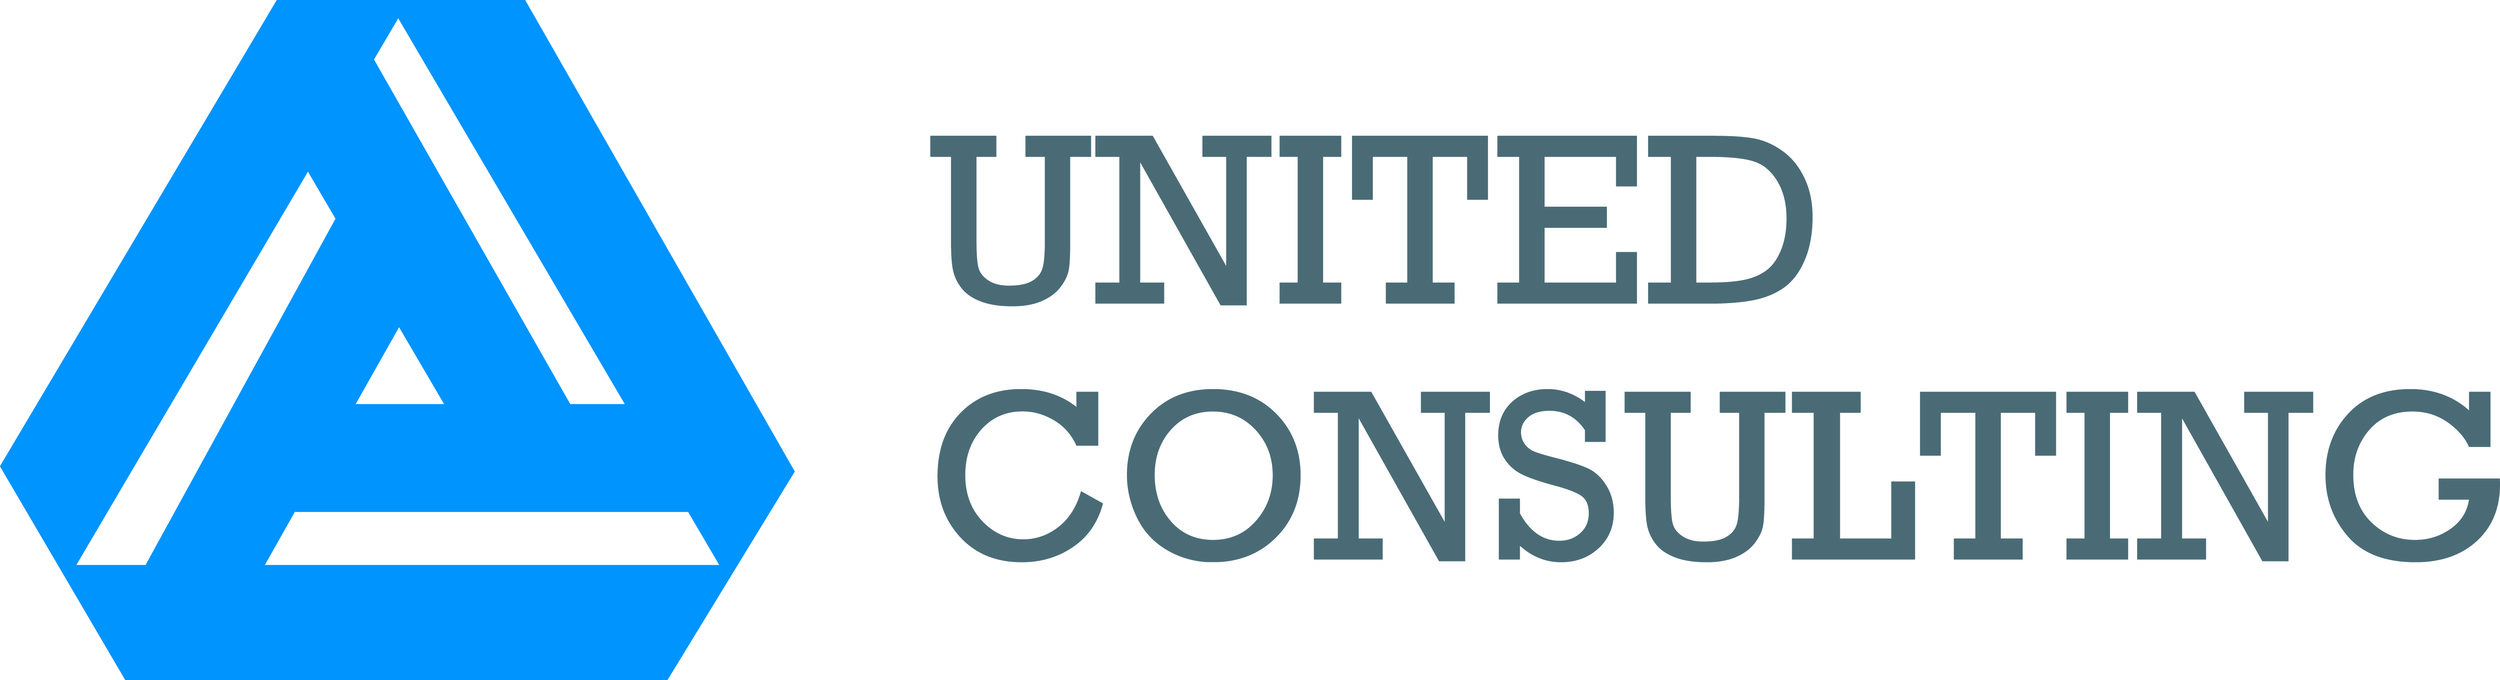 United Consulting Logo 2016.jpg